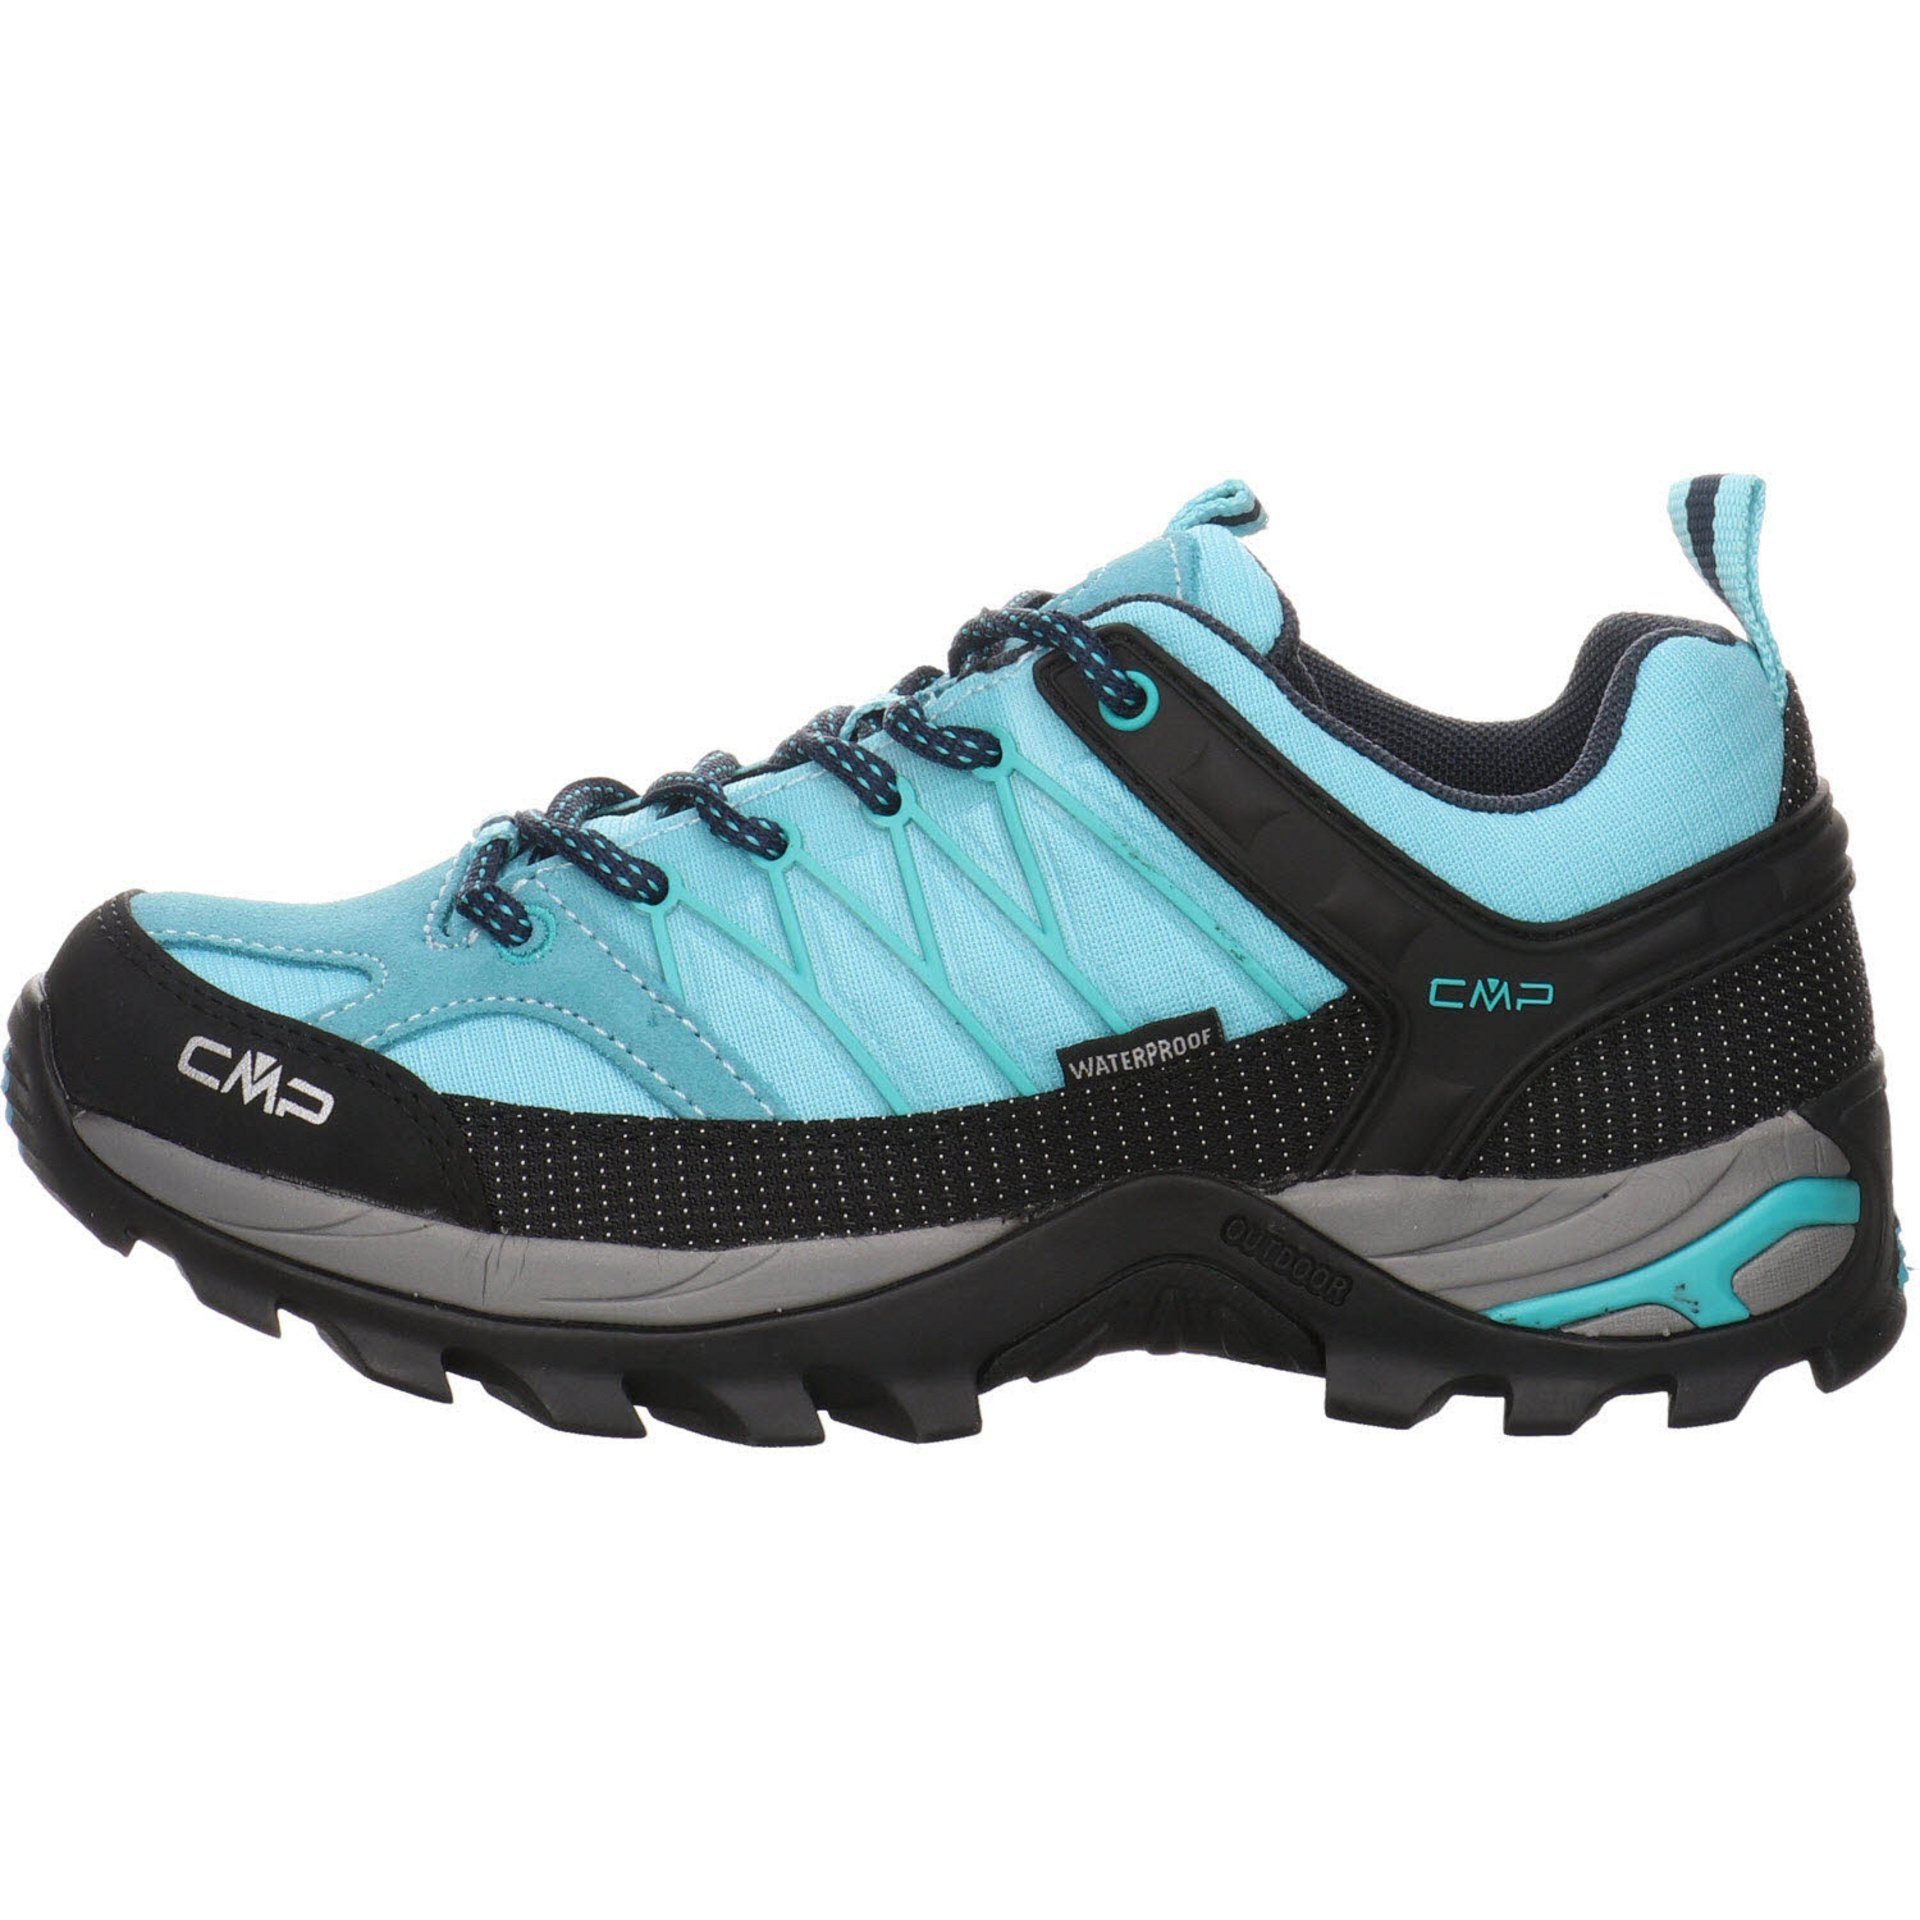 Schuhe Outdoorschuh kombiniert blau Low Synthetikkombination Rigel Outdoorschuh Outdoor Damen CMP mit